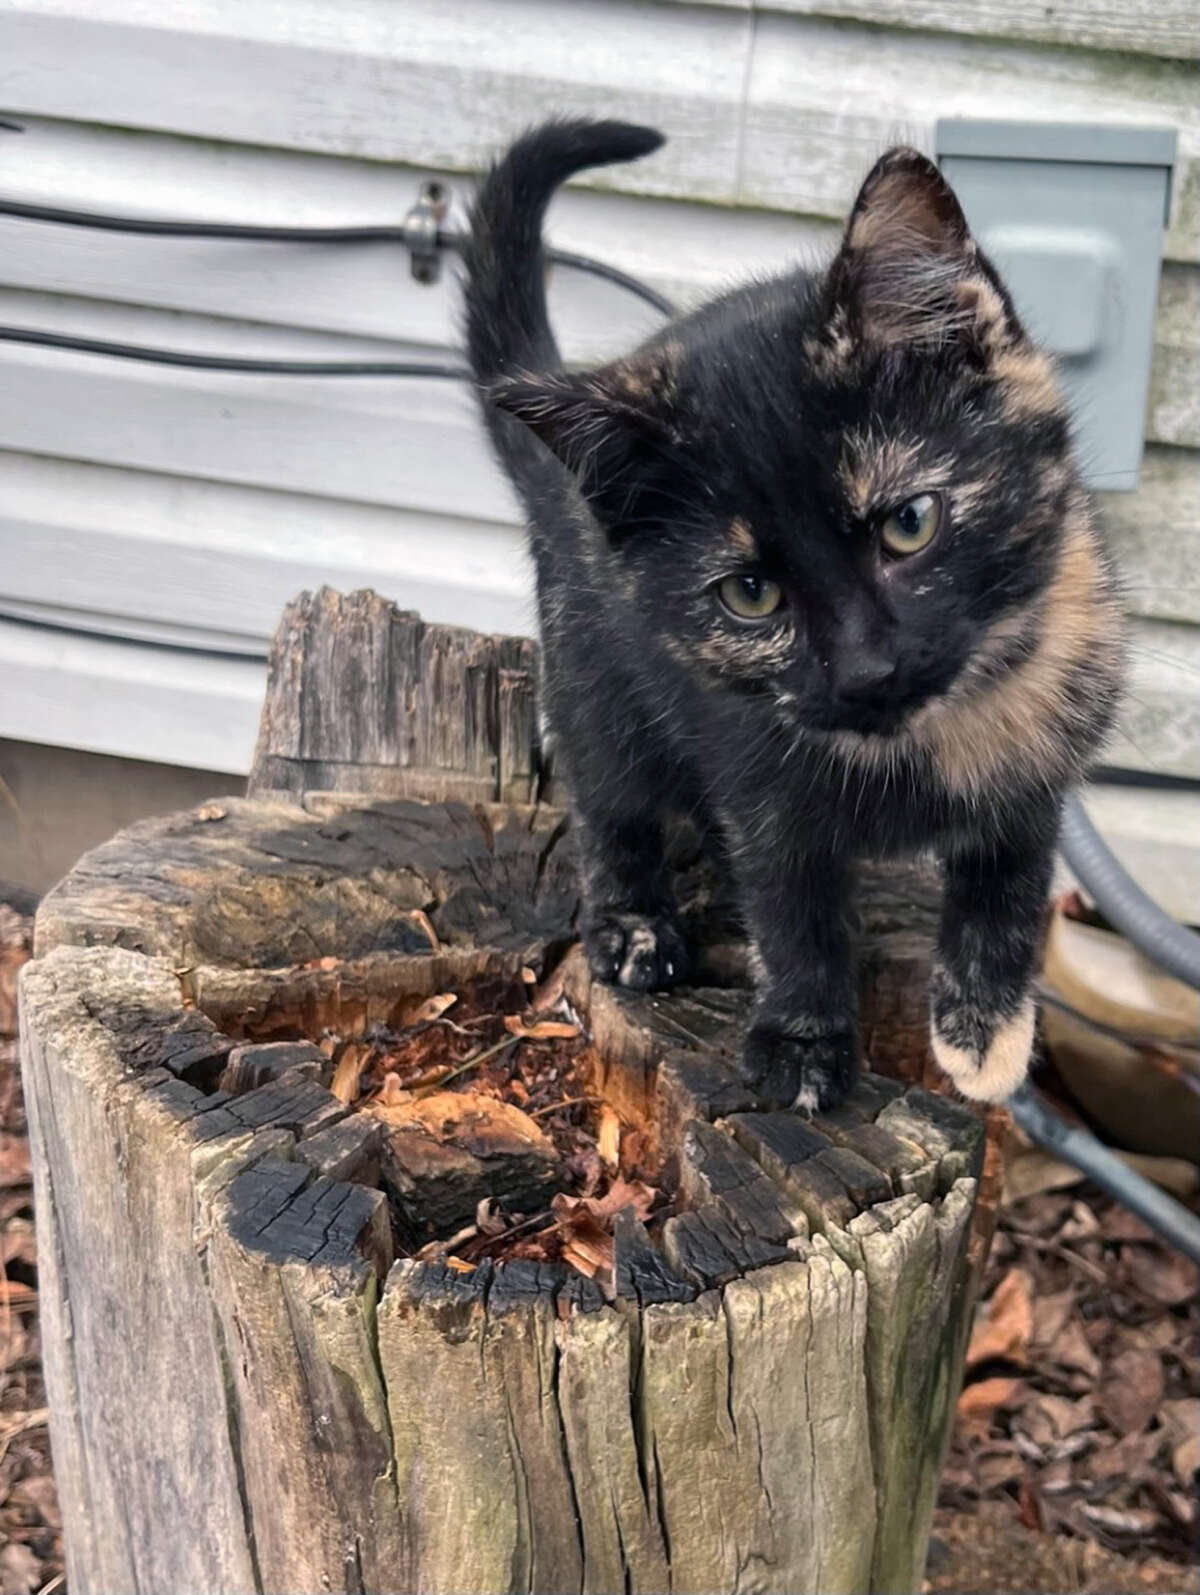 A pretty kitty strikes a pose on a tree stump.